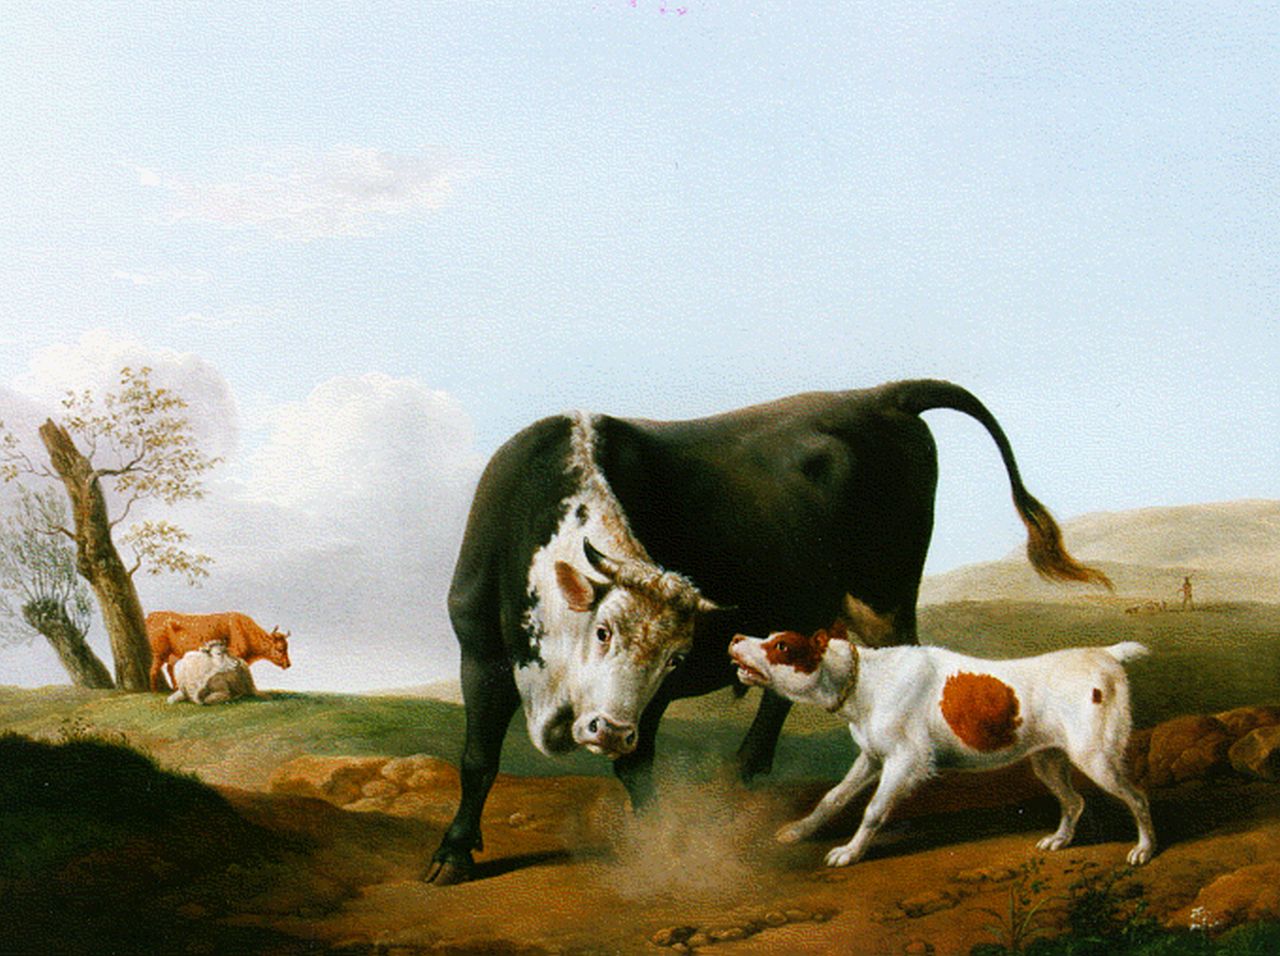 Dallinger von Dalling A.J.  | Alexander Johann Dallinger von Dalling, The fight, oil on panel 30.0 x 36.3 cm, signed l.l. and dated 1837